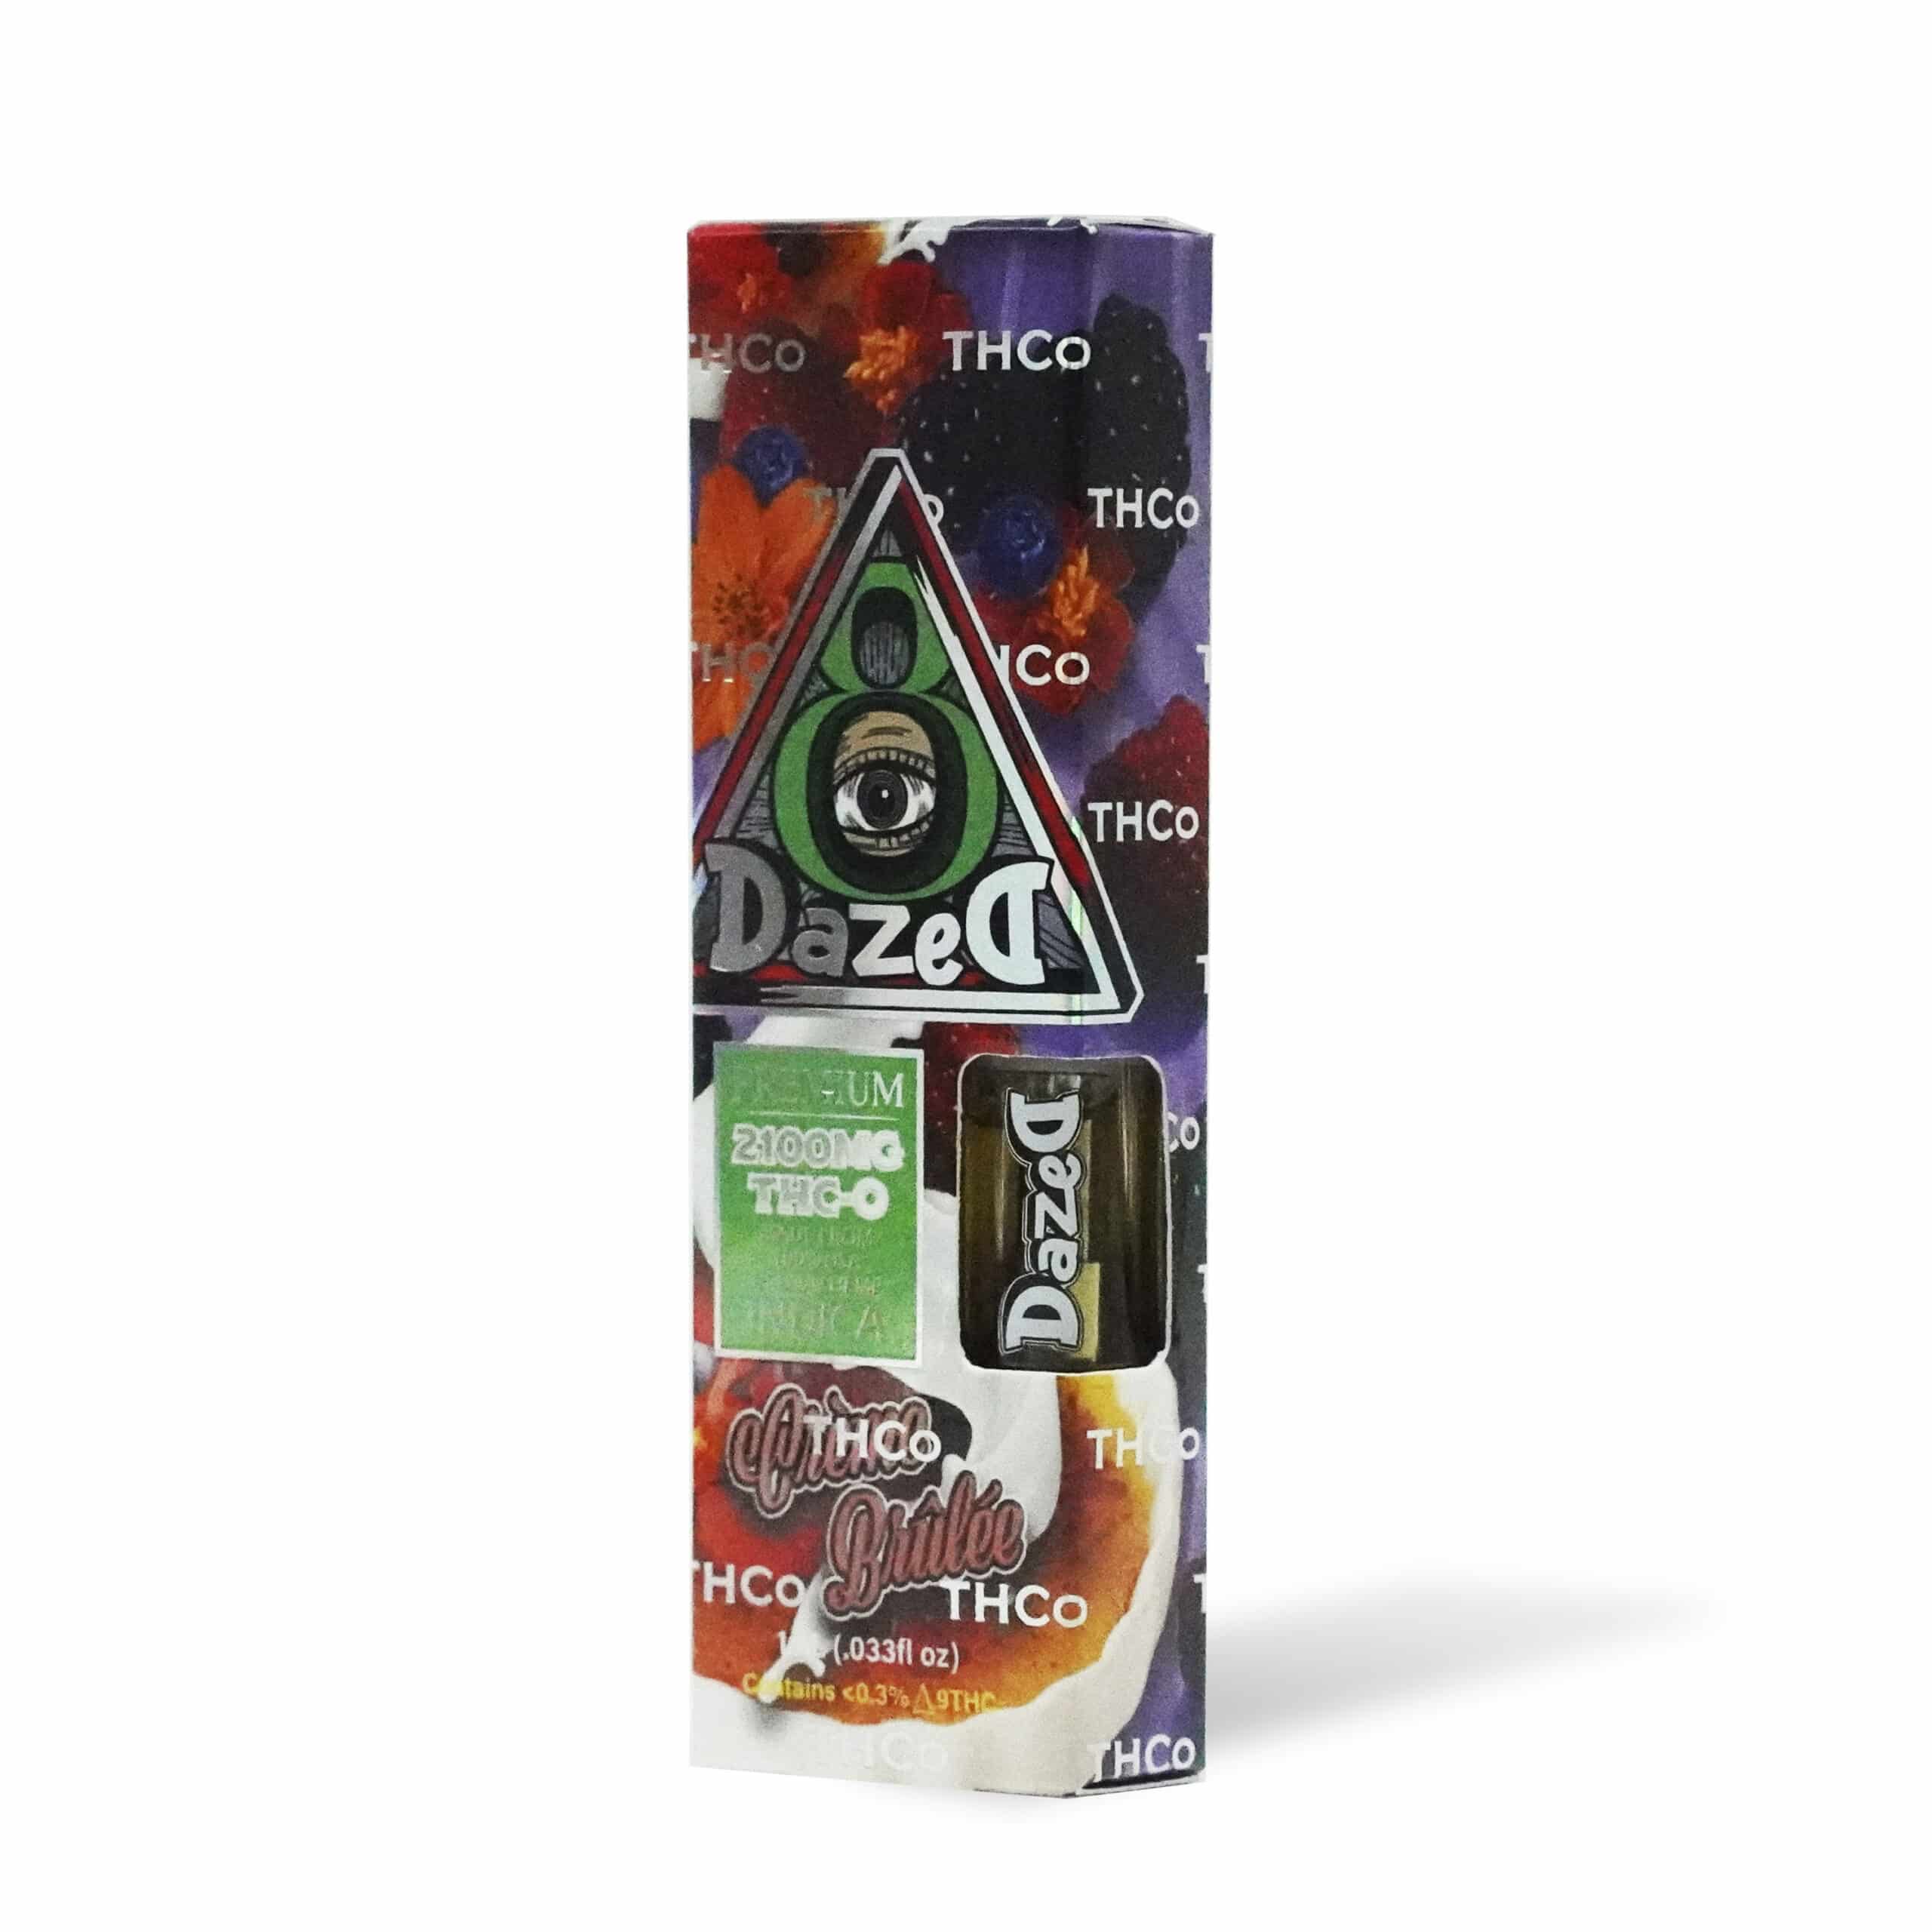 DazeD8 Creme Brulee Delta 8 THC-O Cartridge (2.1g) Best Price